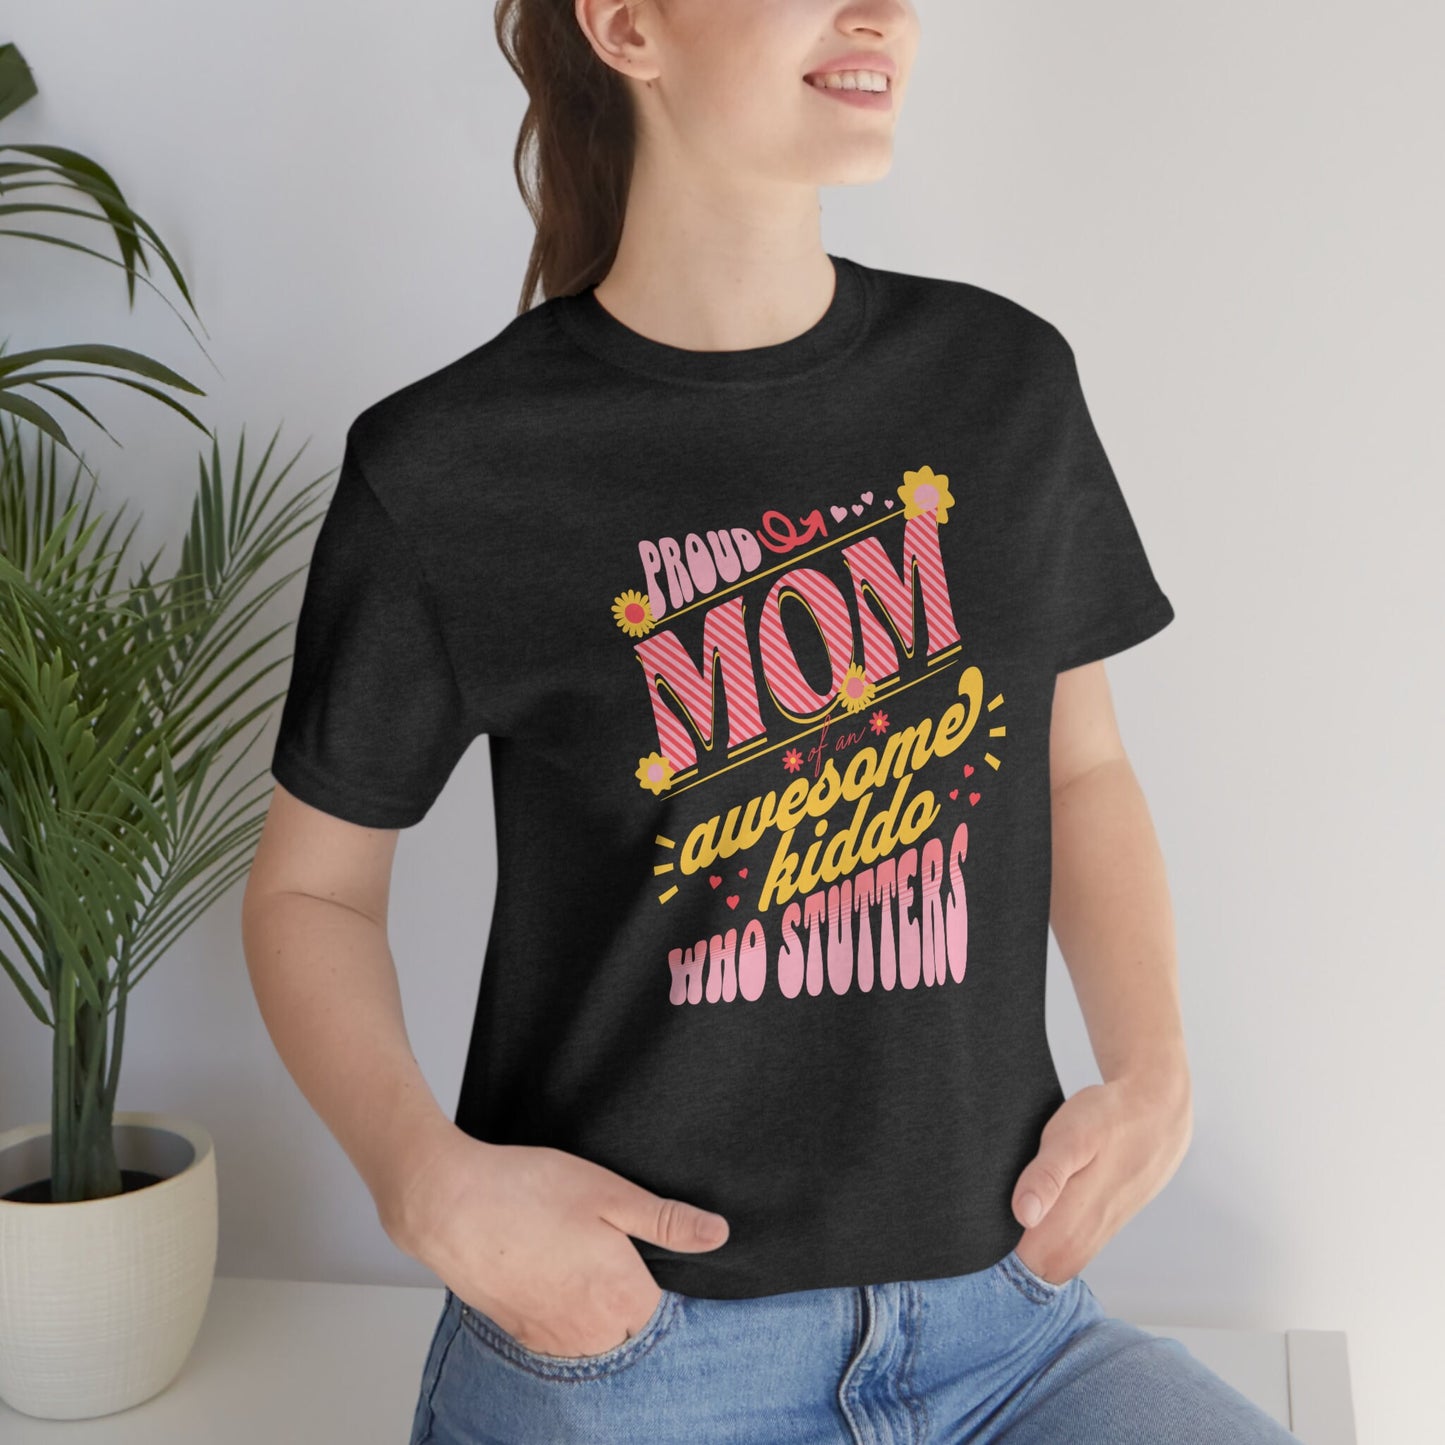 Stutter Proud Mom Shirt Mother's Day Gift